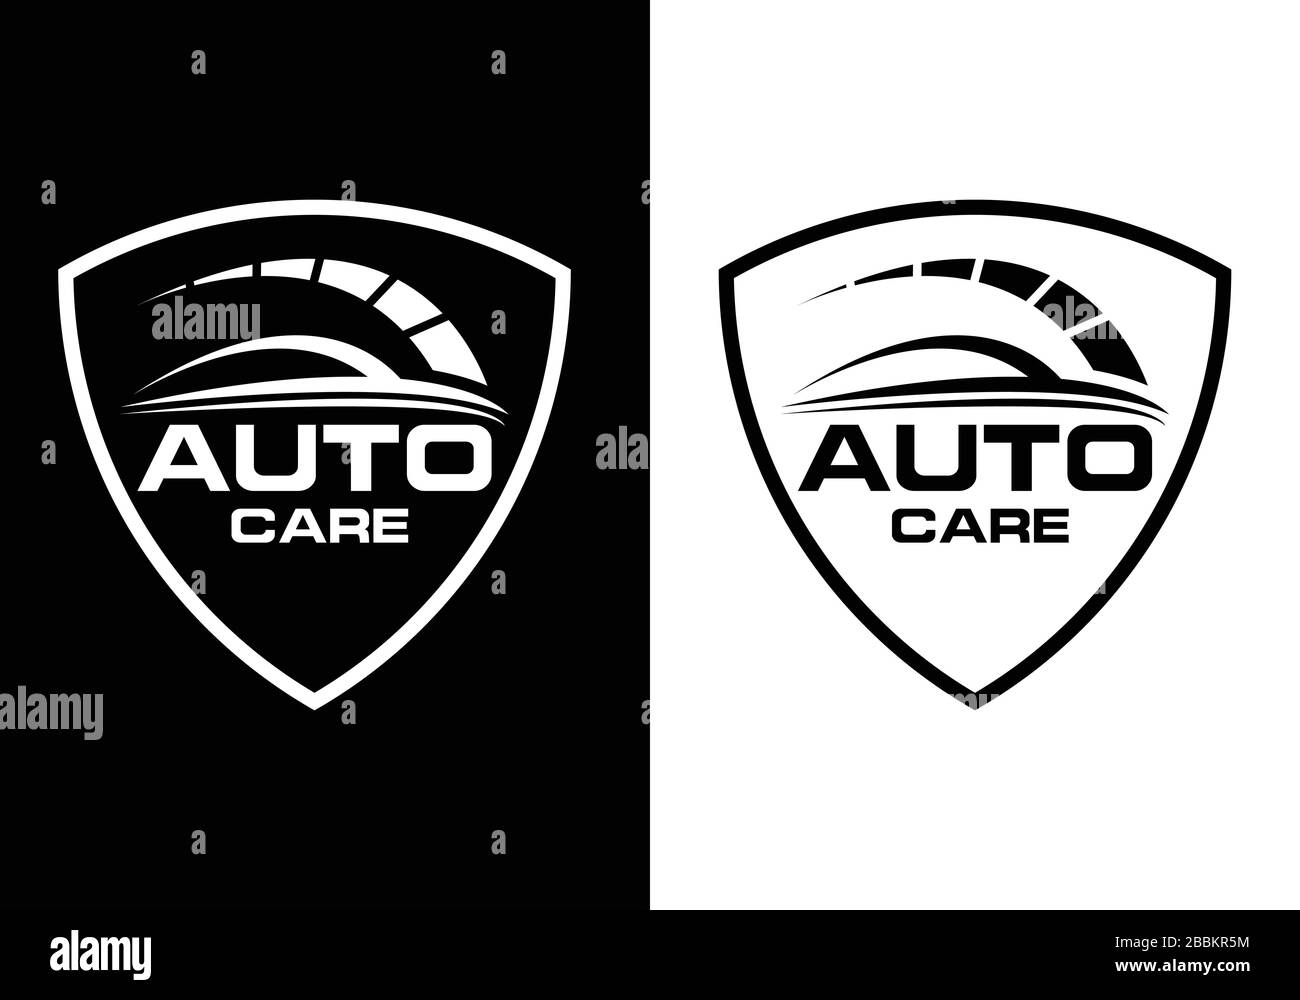 Abstract Car logo sign symbol for Automotive Company. Stock Vector